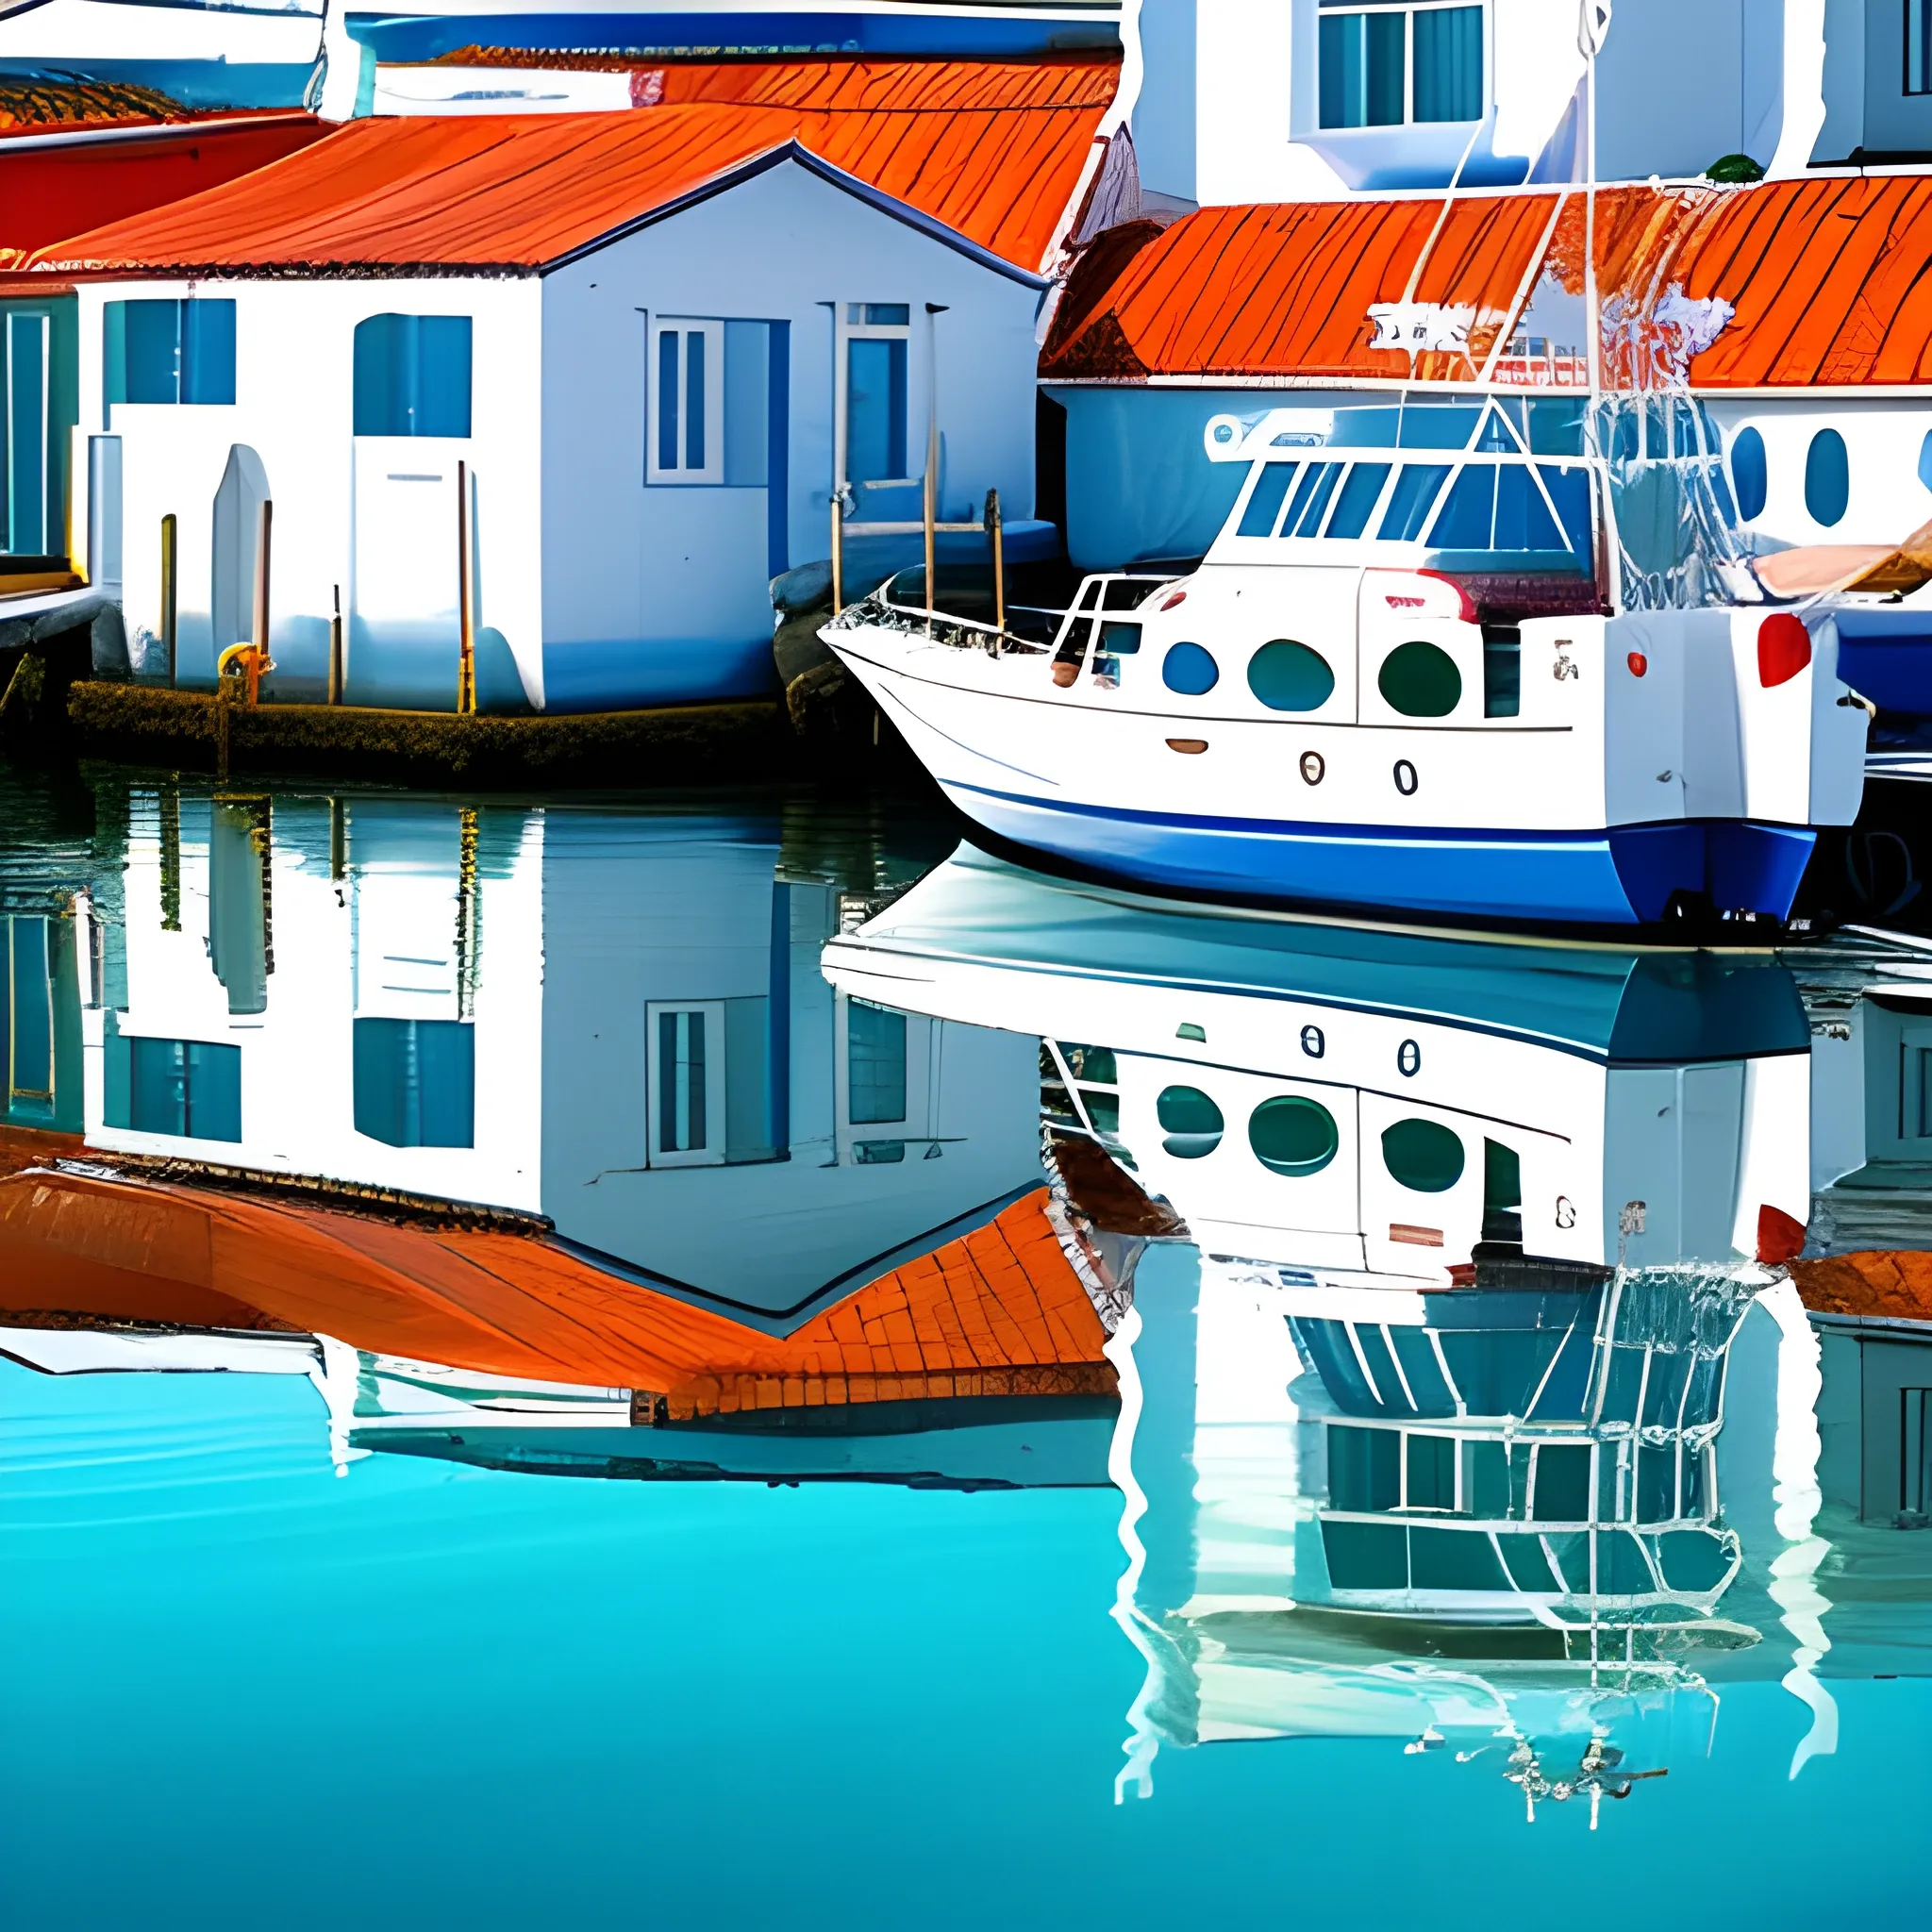 marina, one boat, reflections, horizon, shore, white houses, fisherman, in the distance, anna masana
, Trippy